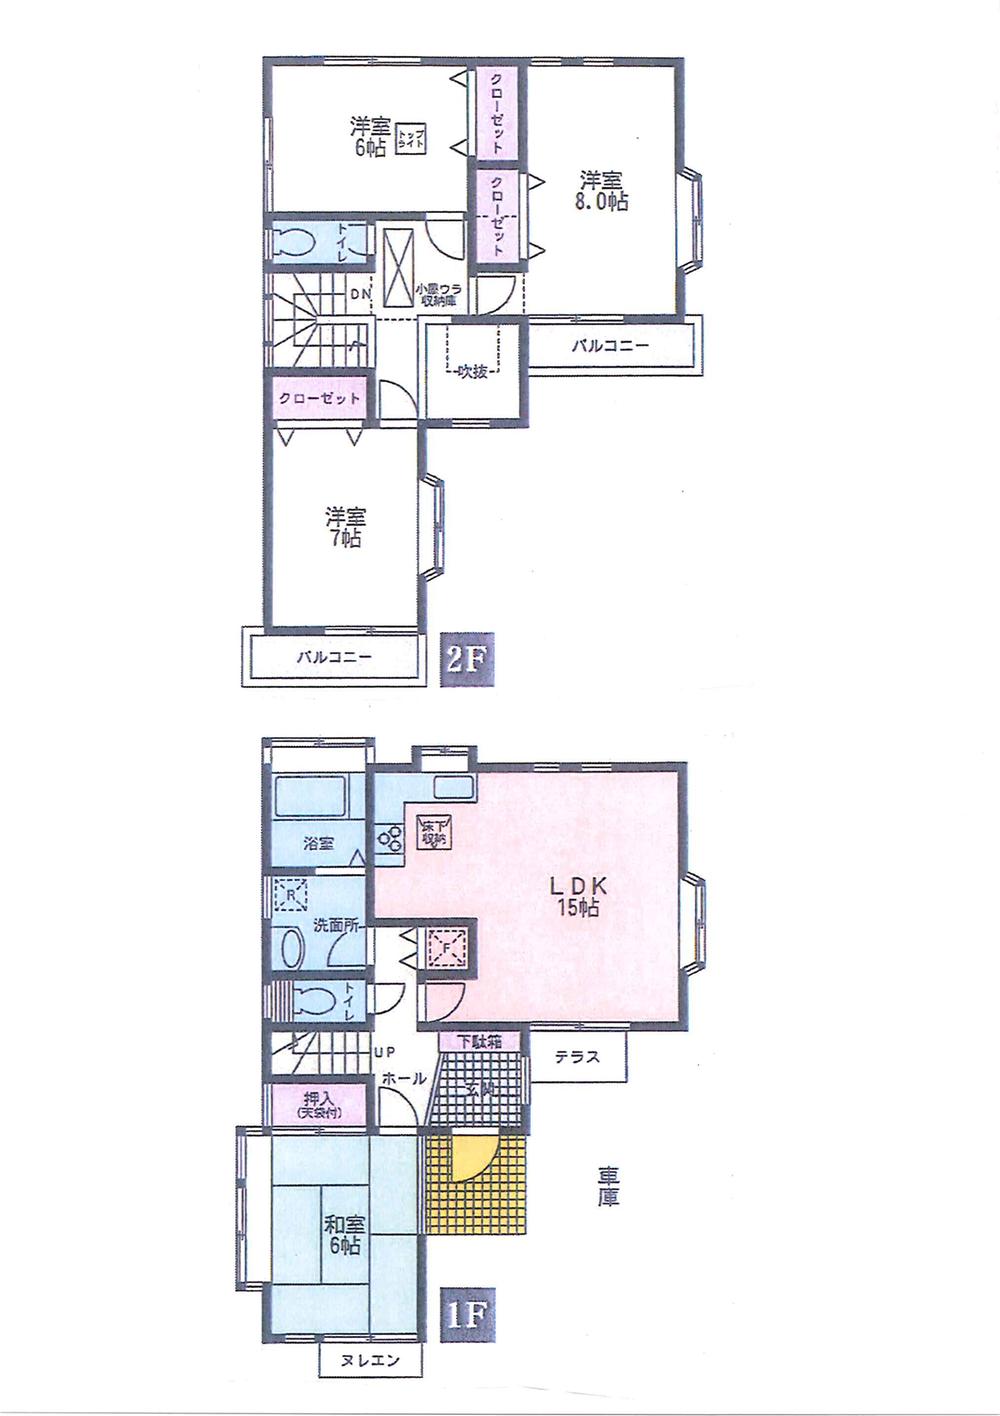 Floor plan. 21,800,000 yen, 4LDK, Land area 105.2 sq m , Building area 97.21 sq m